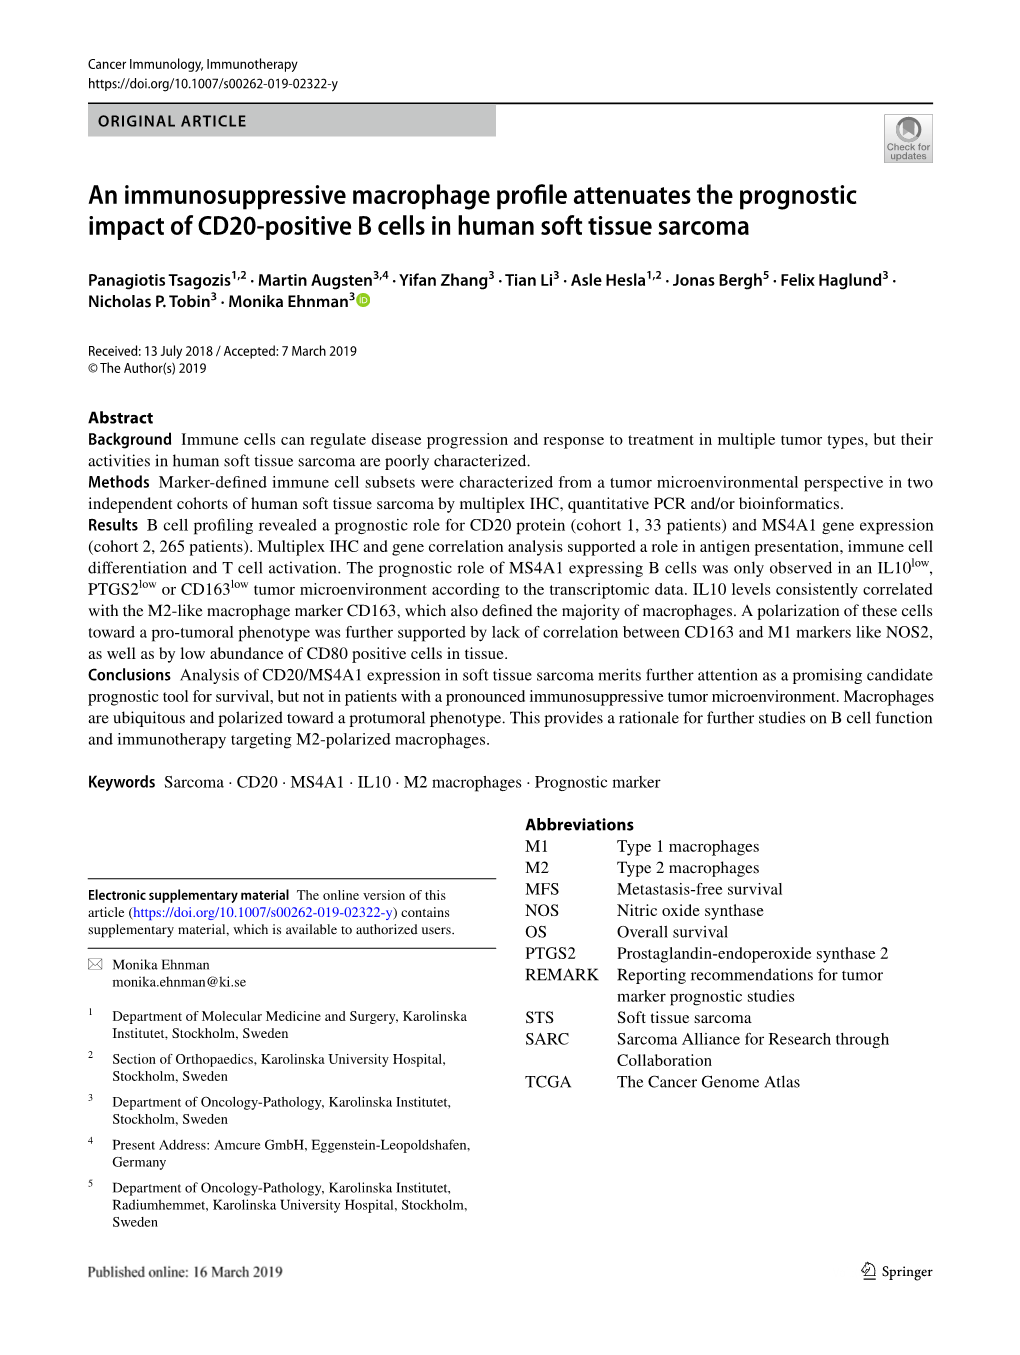 An Immunosuppressive Macrophage Profile Attenuates the Prognostic Impact of CD20-Positive B Cells in Human Soft Tissue Sarcoma